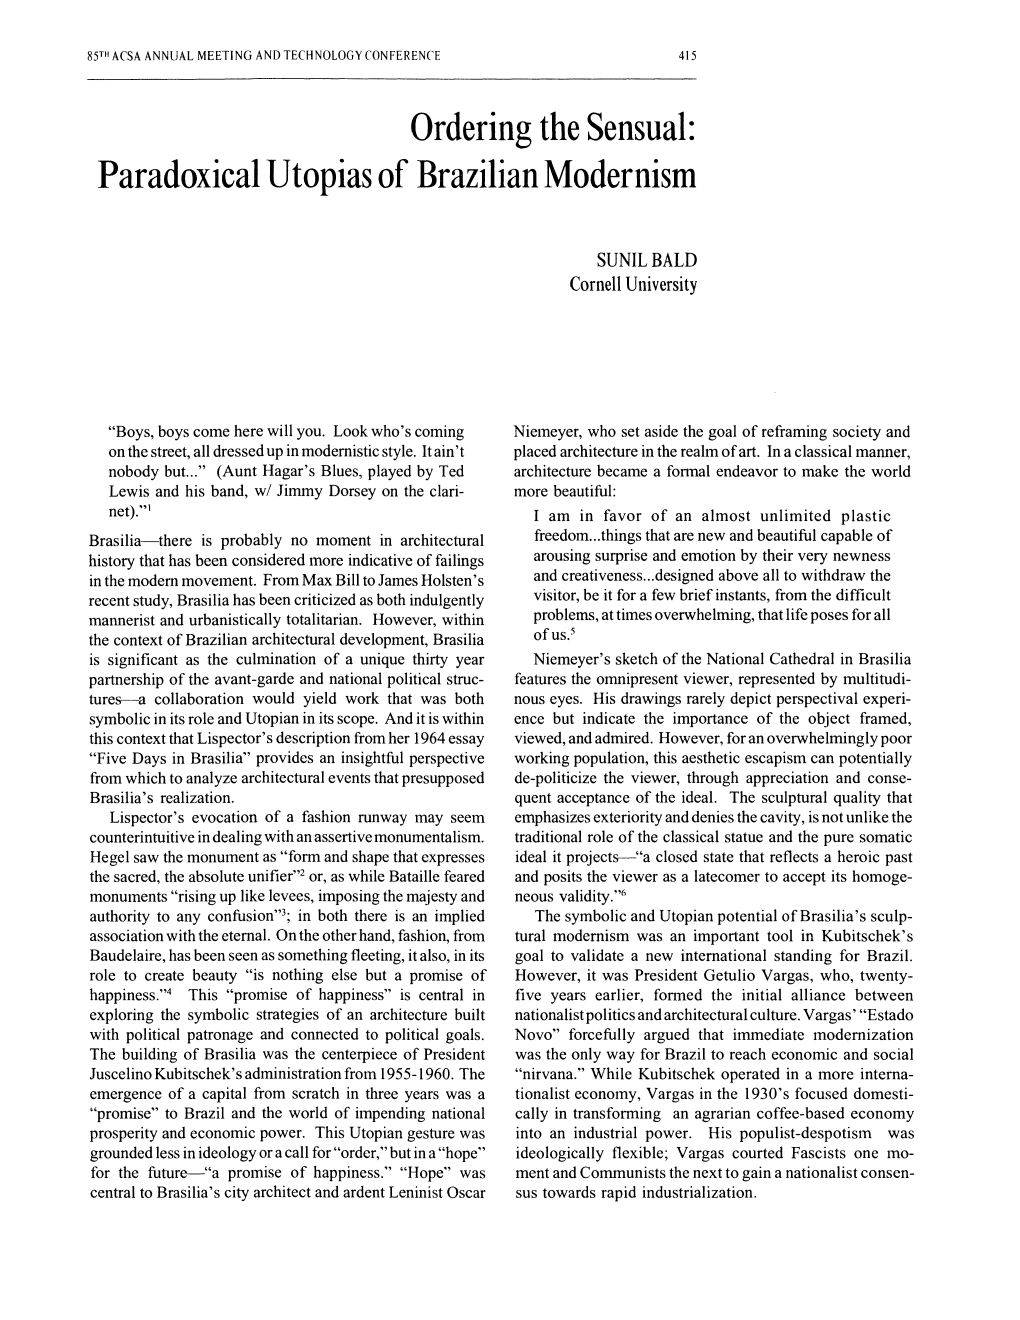 Ordering the Sensual: Paradoxical Utopias of Brazilian Modernism